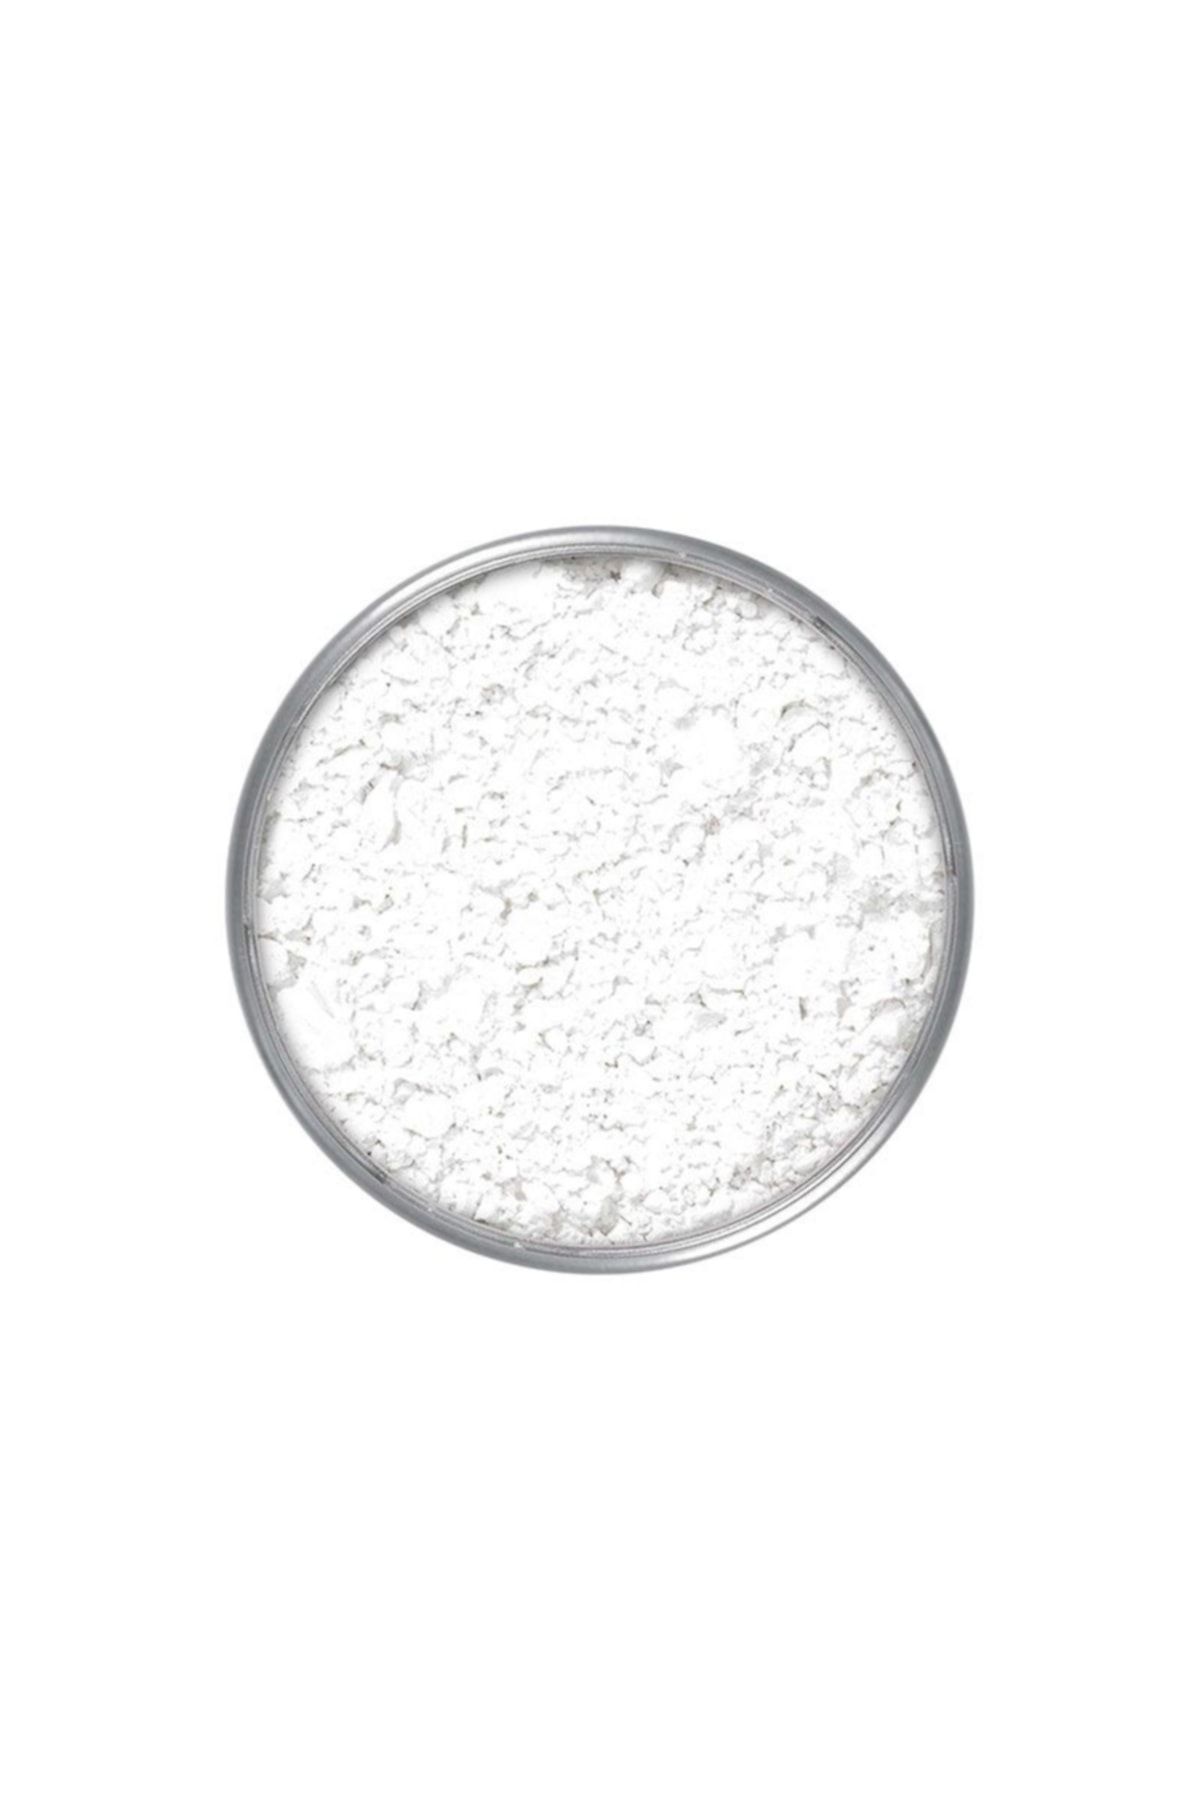 Kryolan Transparan Pudra Translucent Powder 50 gr 05700 Tl1